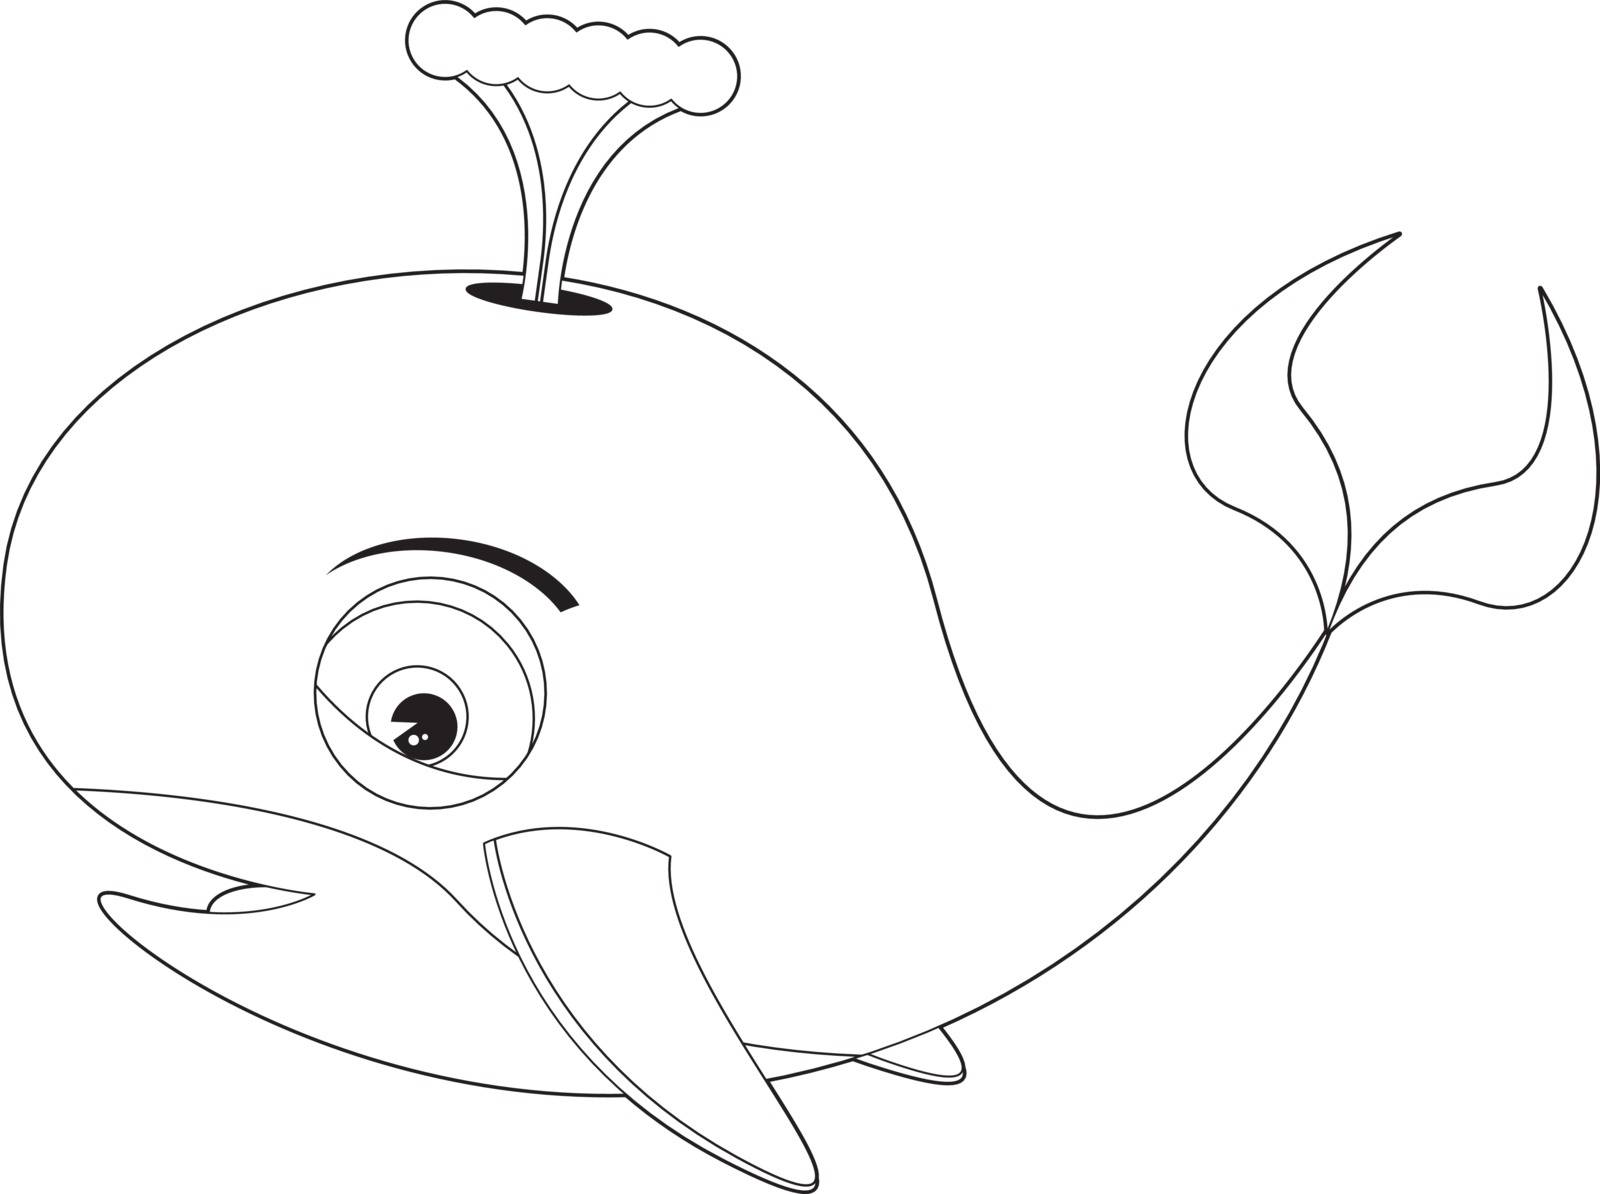 Cartoon Whale by markmurphycreative